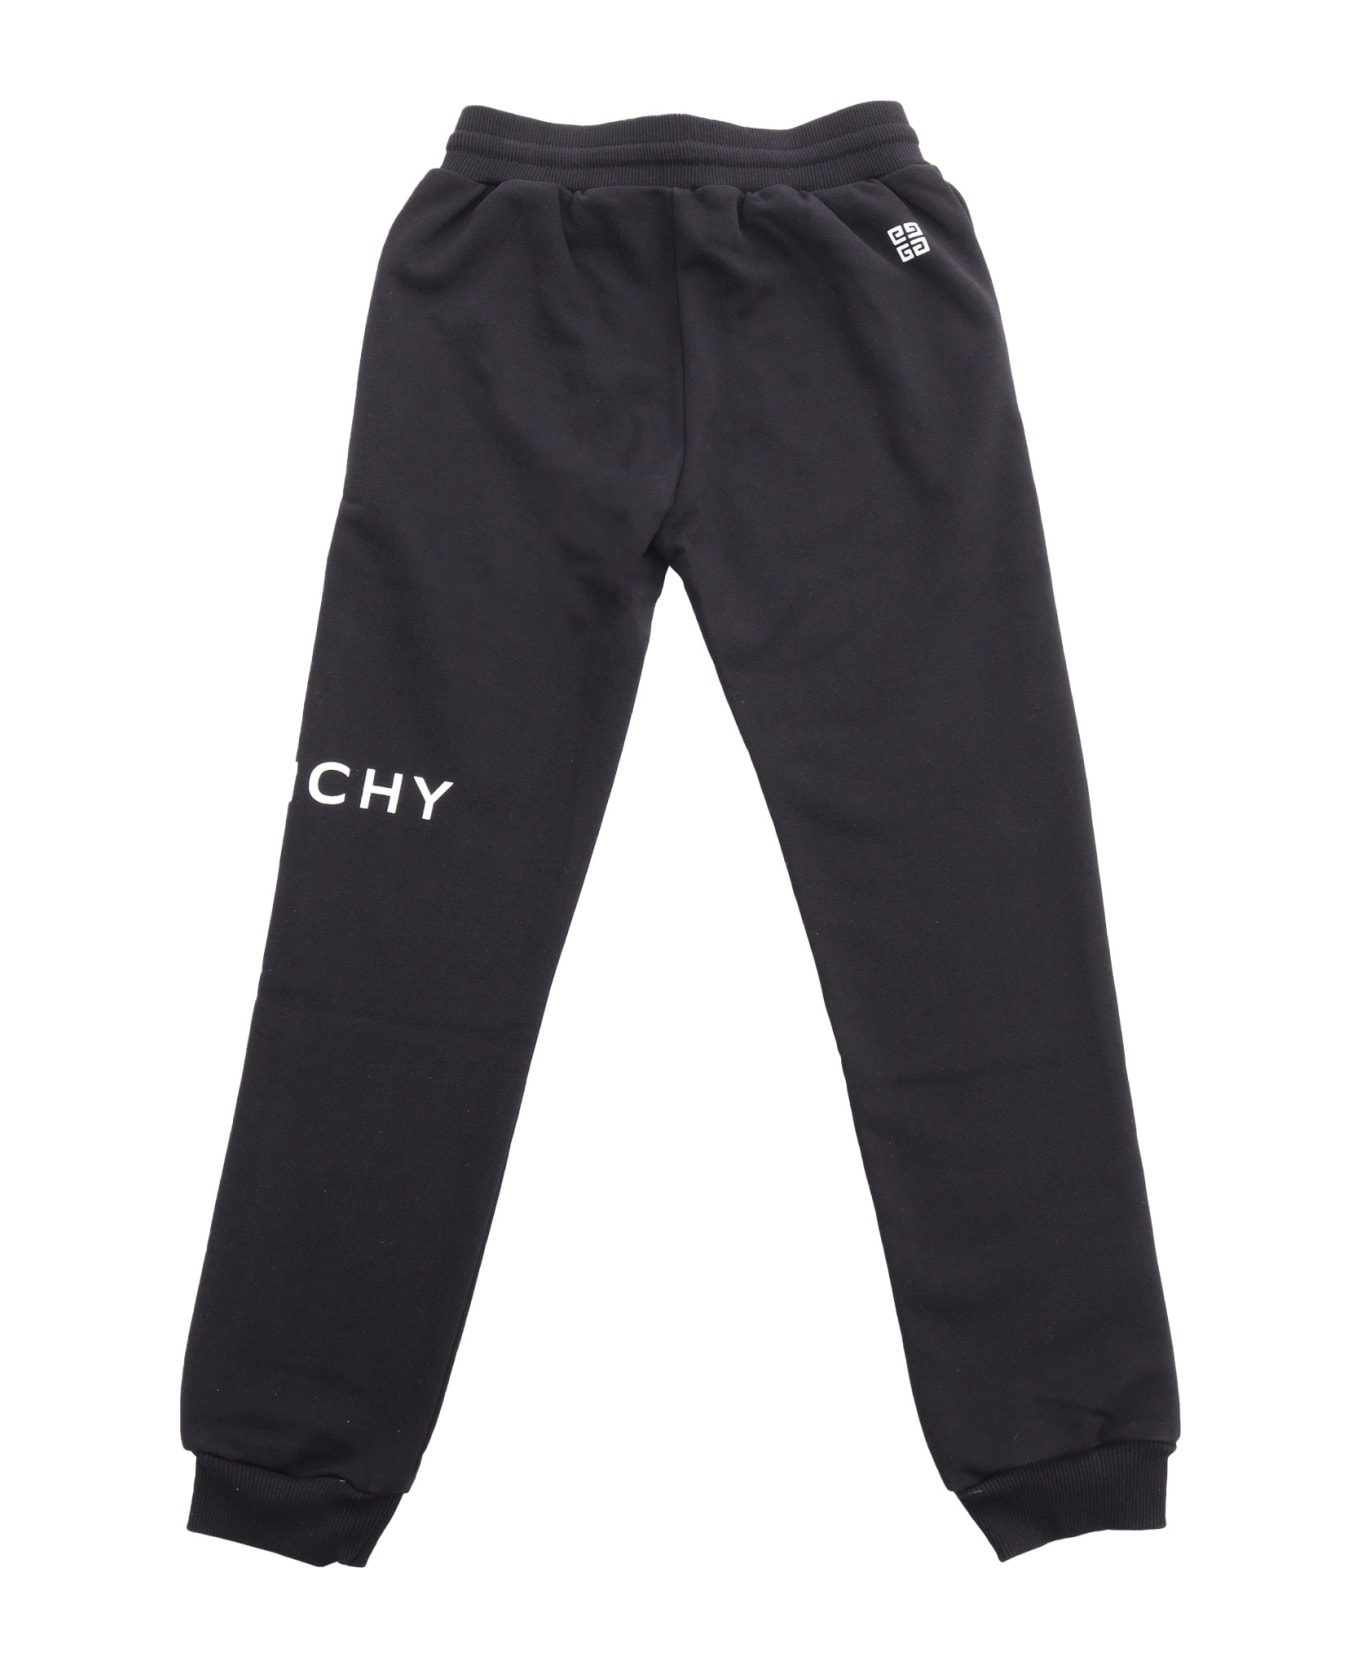 Givenchy Black Jogging Pants - BLACK